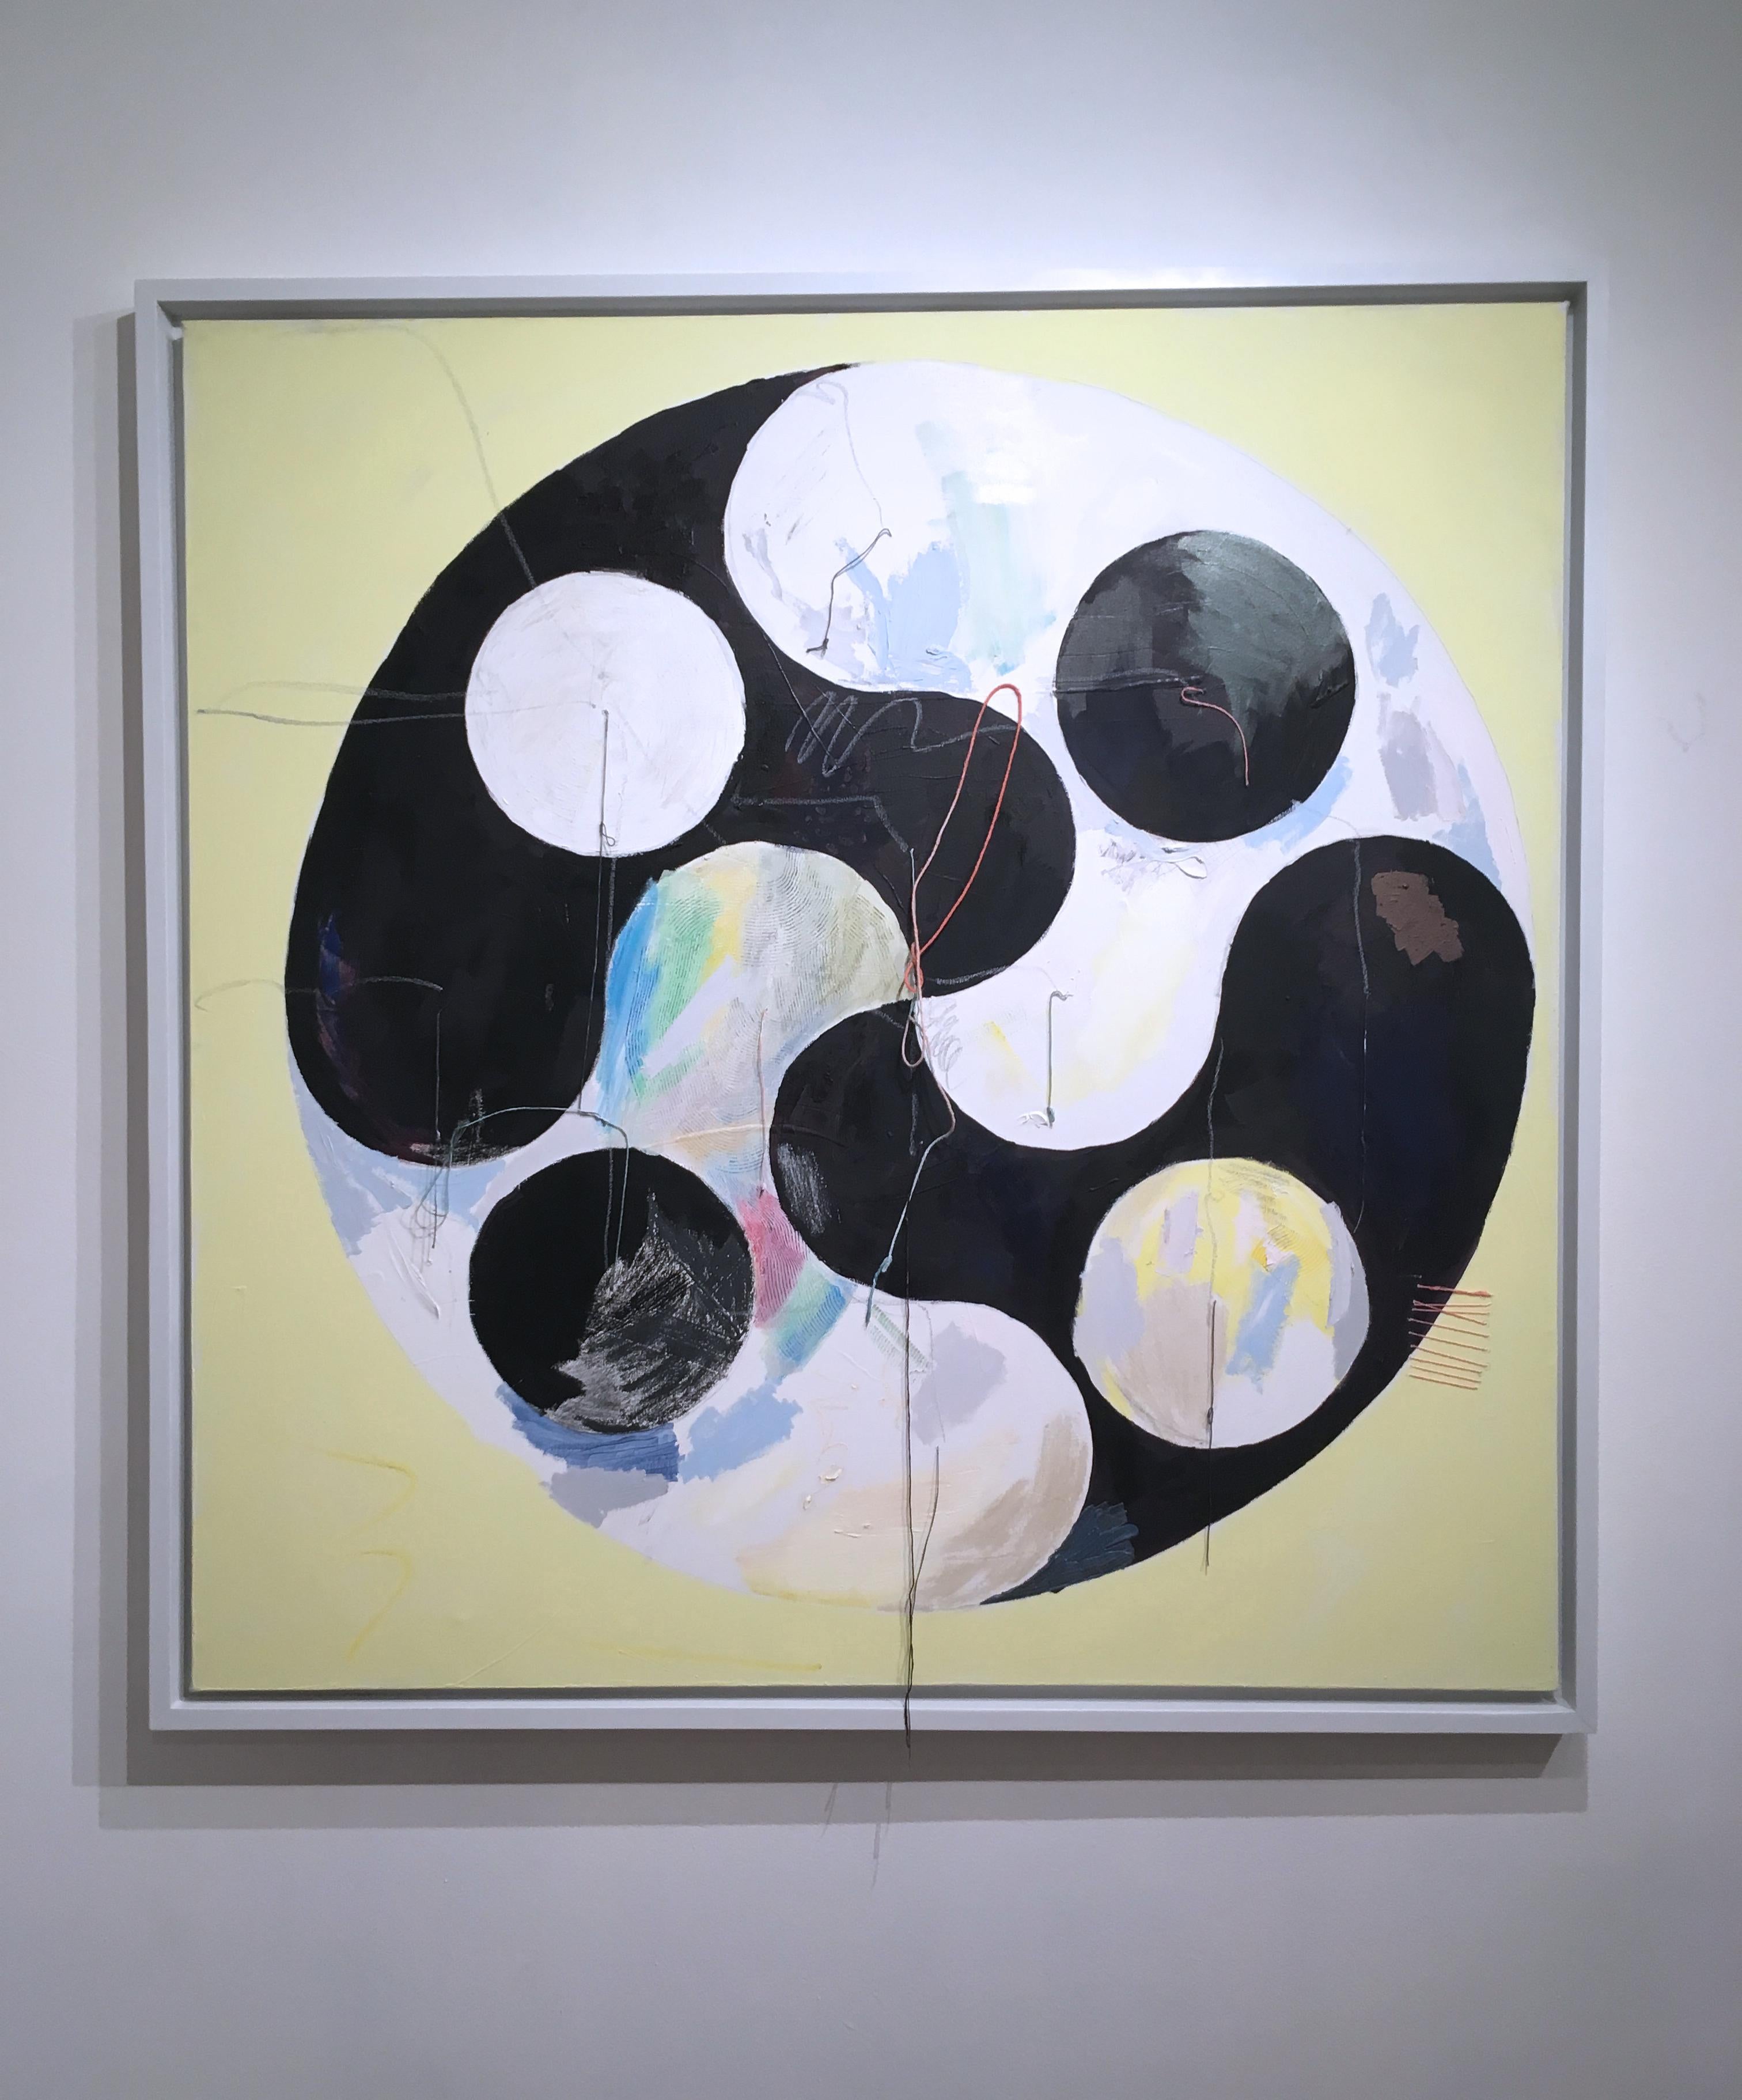 Yin Yang, 2020, acrylic, oil, canvas, yarn, thread, black, yellow, abstract - Painting by Macauley Norman